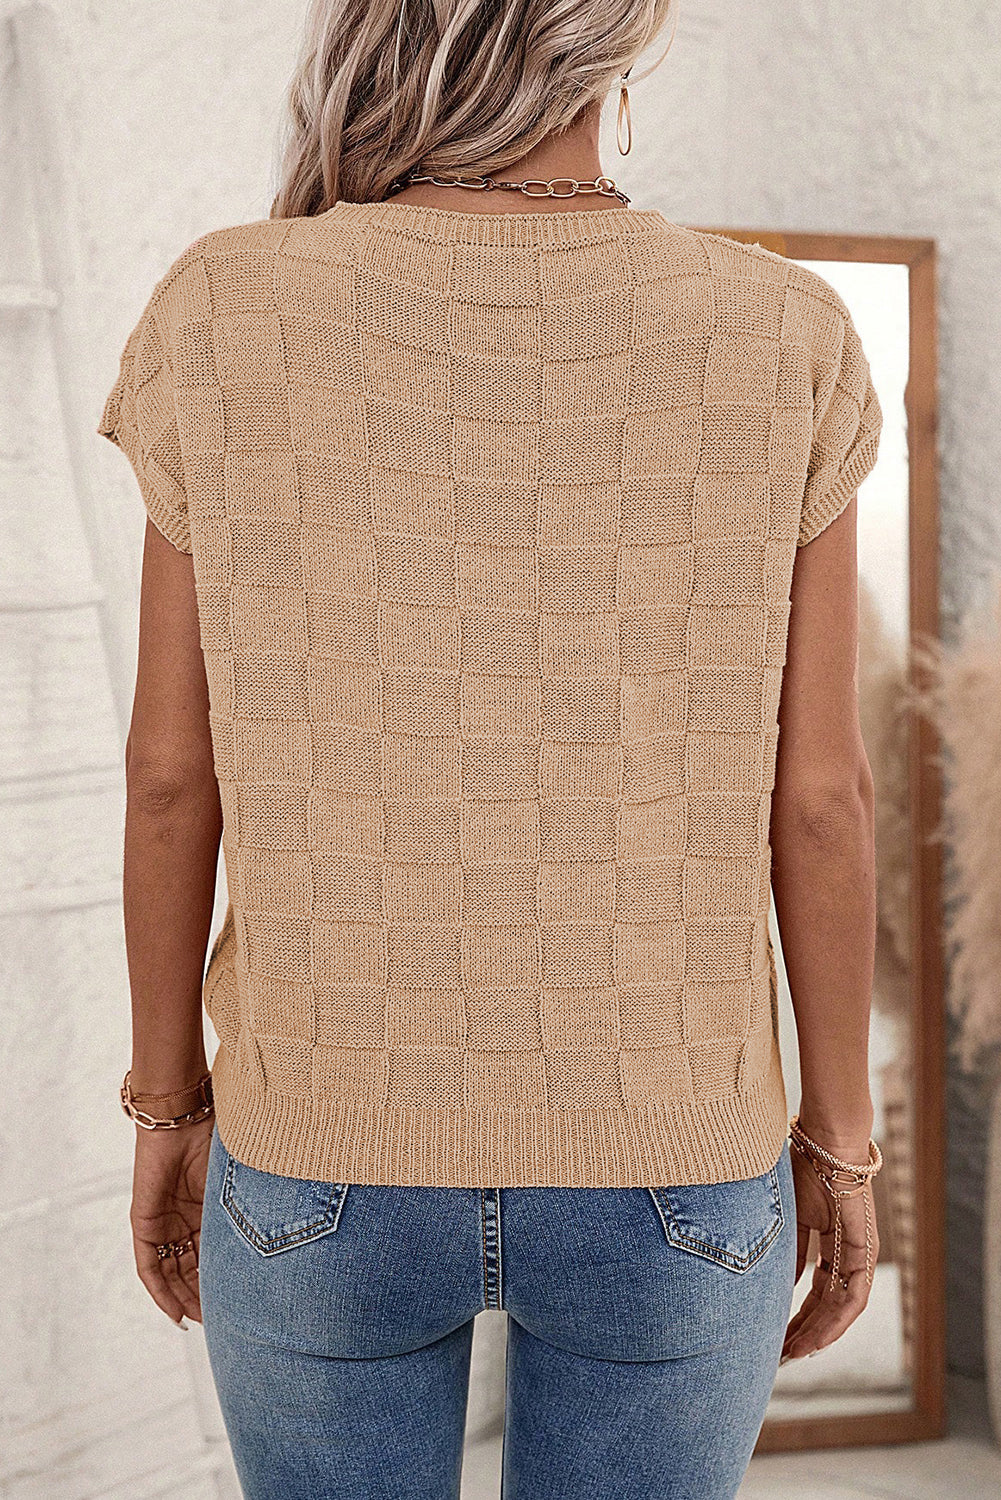 Andrea Lattice Textured Knit Short Sleeve Sweater - Gold Cactus